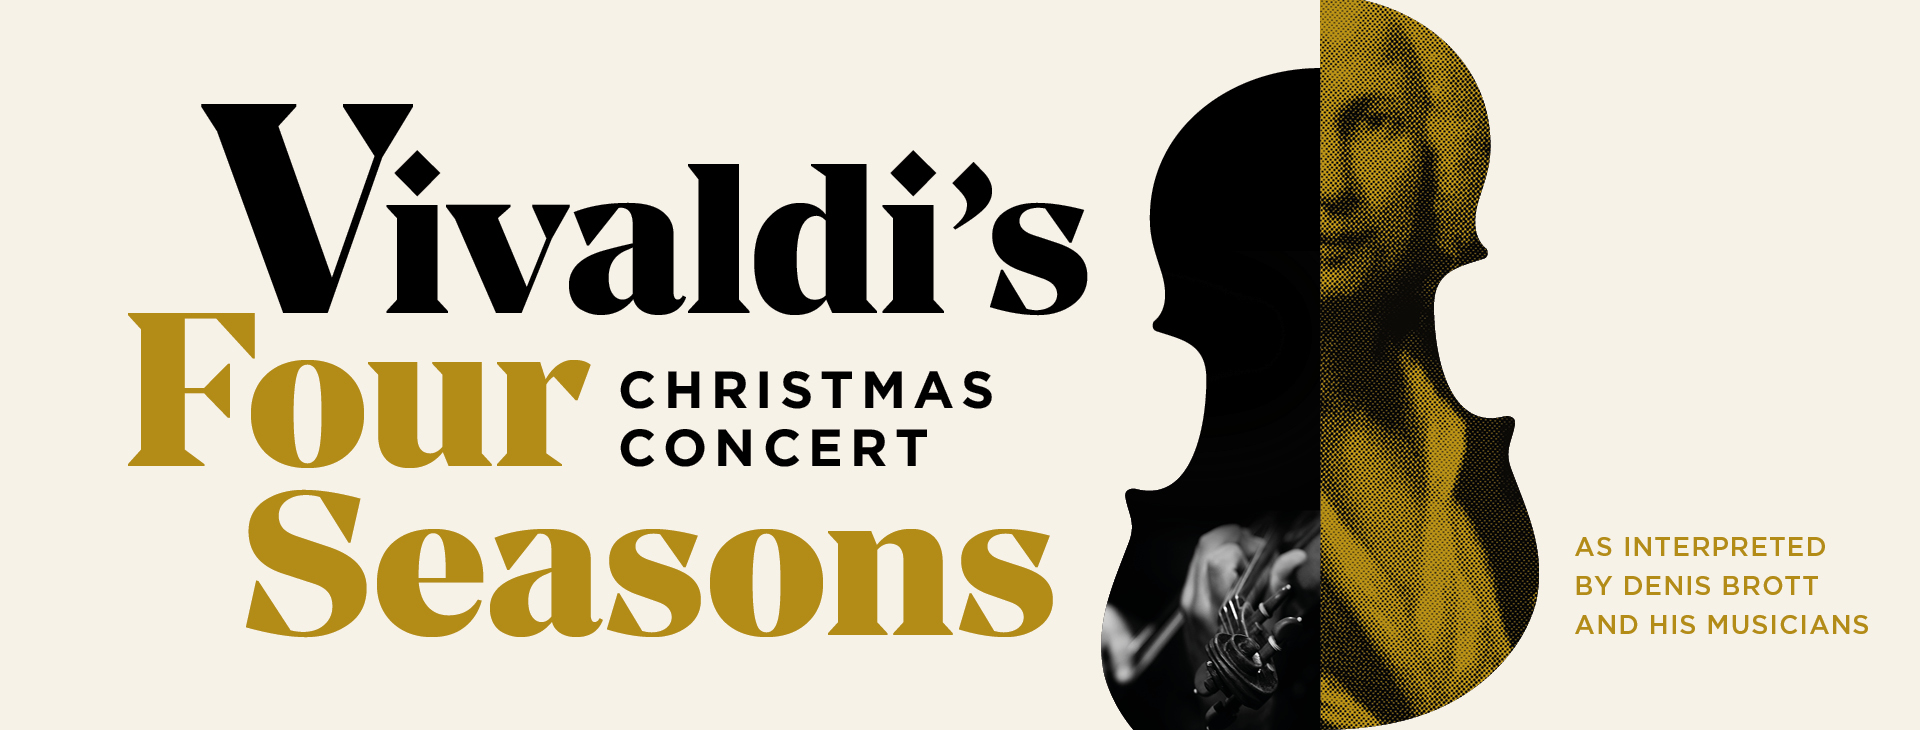 Christmas Concert - four seasons vivaldi